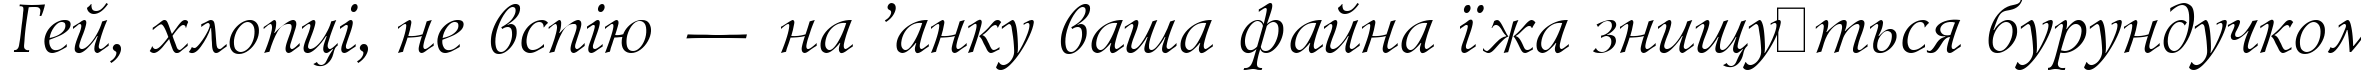 Пример написания шрифтом Lazursky Italic:001.001 текста на украинском